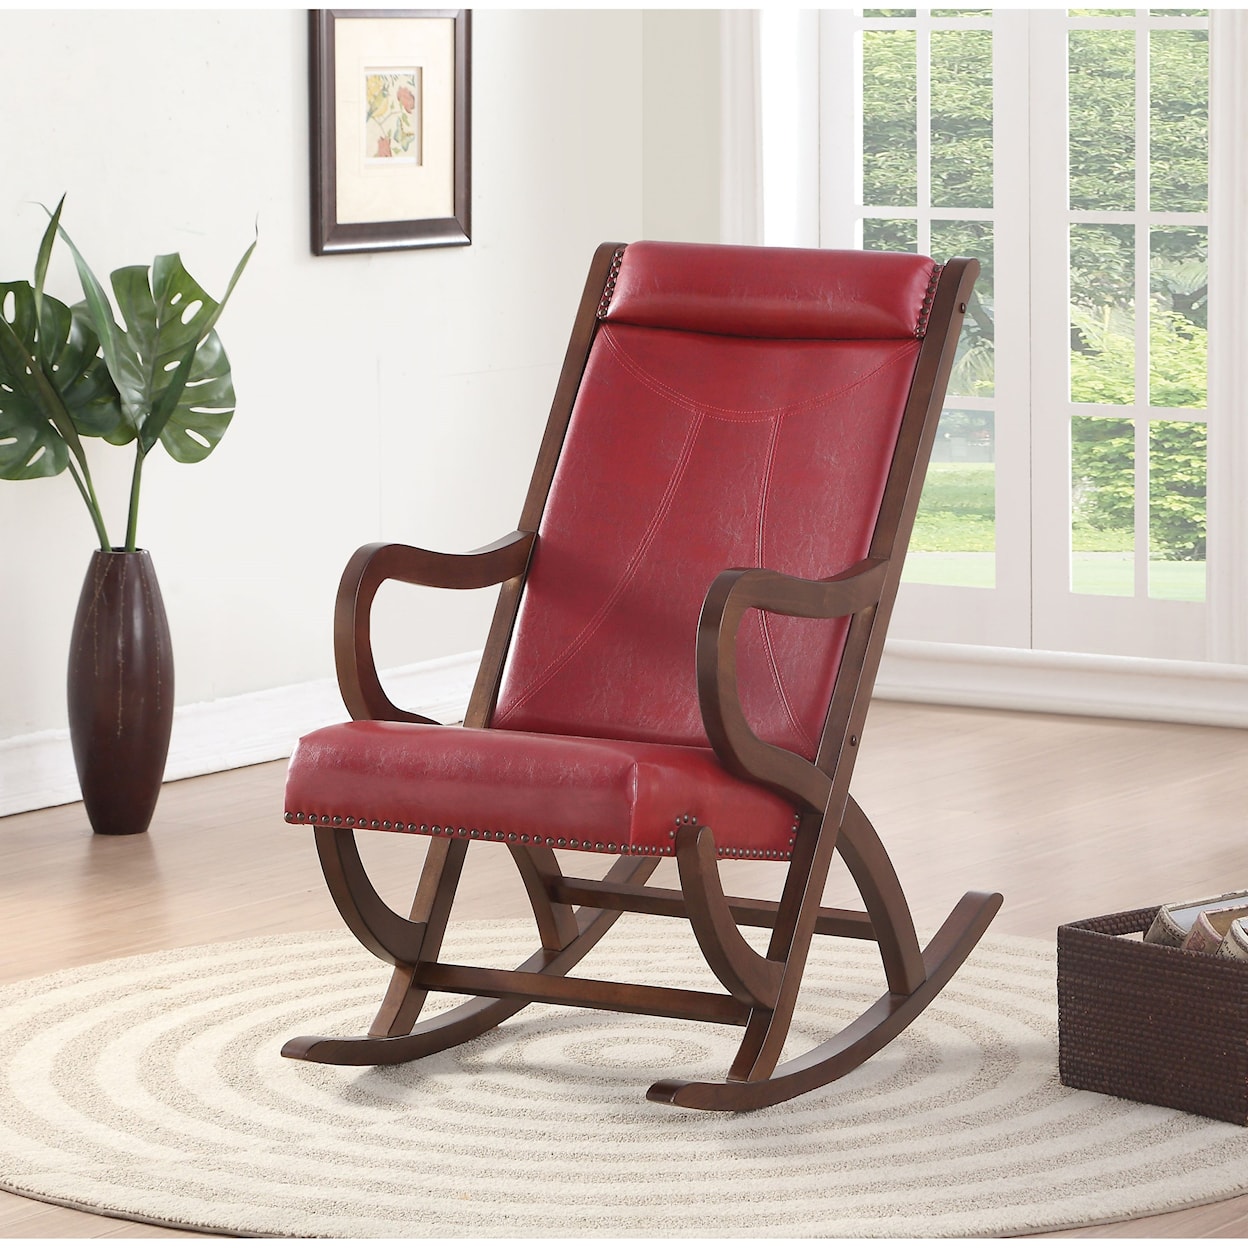 Acme Furniture Triton Rocking Chair